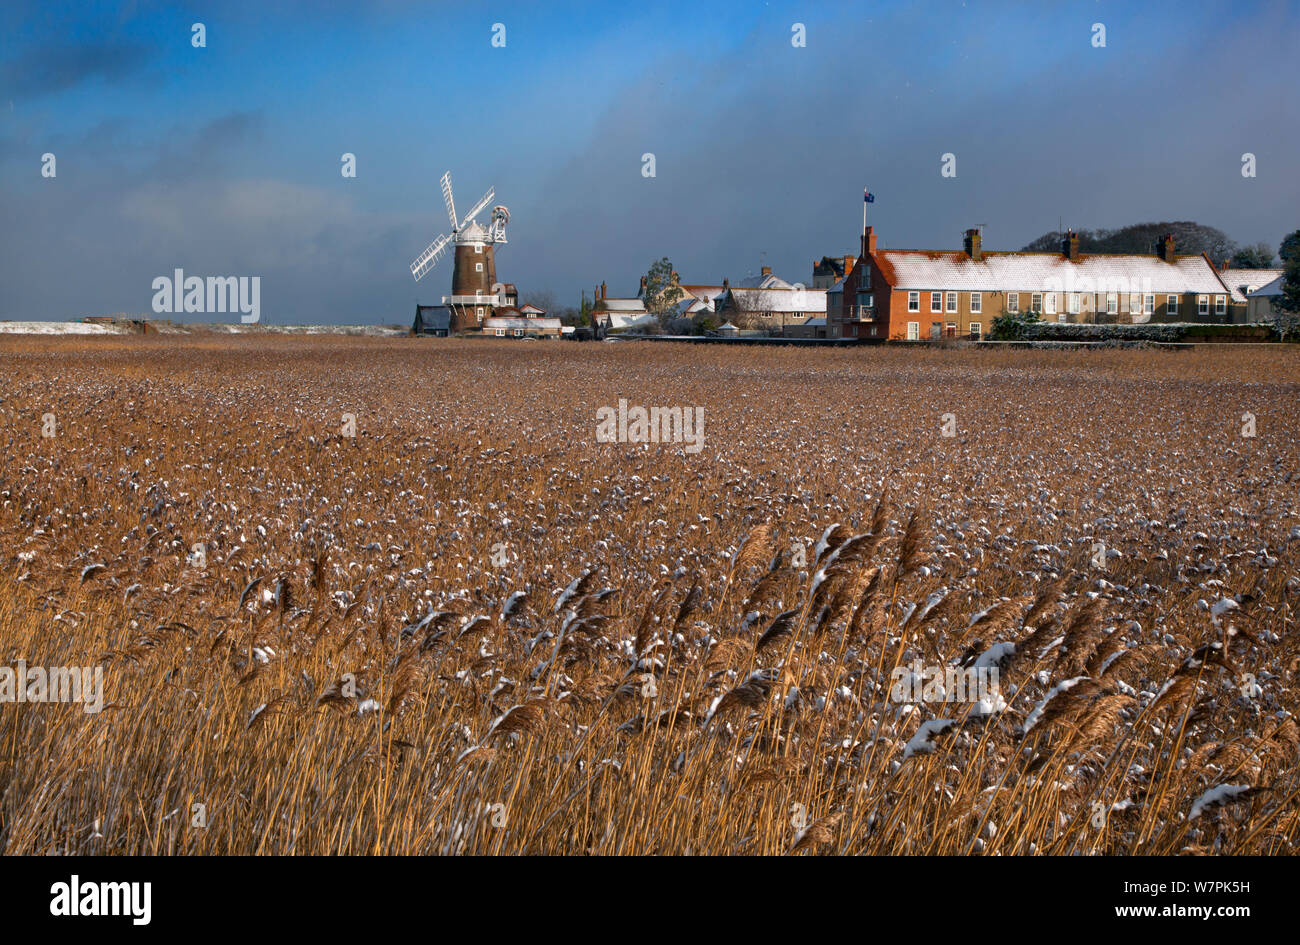 Cley Mill e reedbed con polvere di neve, Norfolk, Gennaio Foto Stock